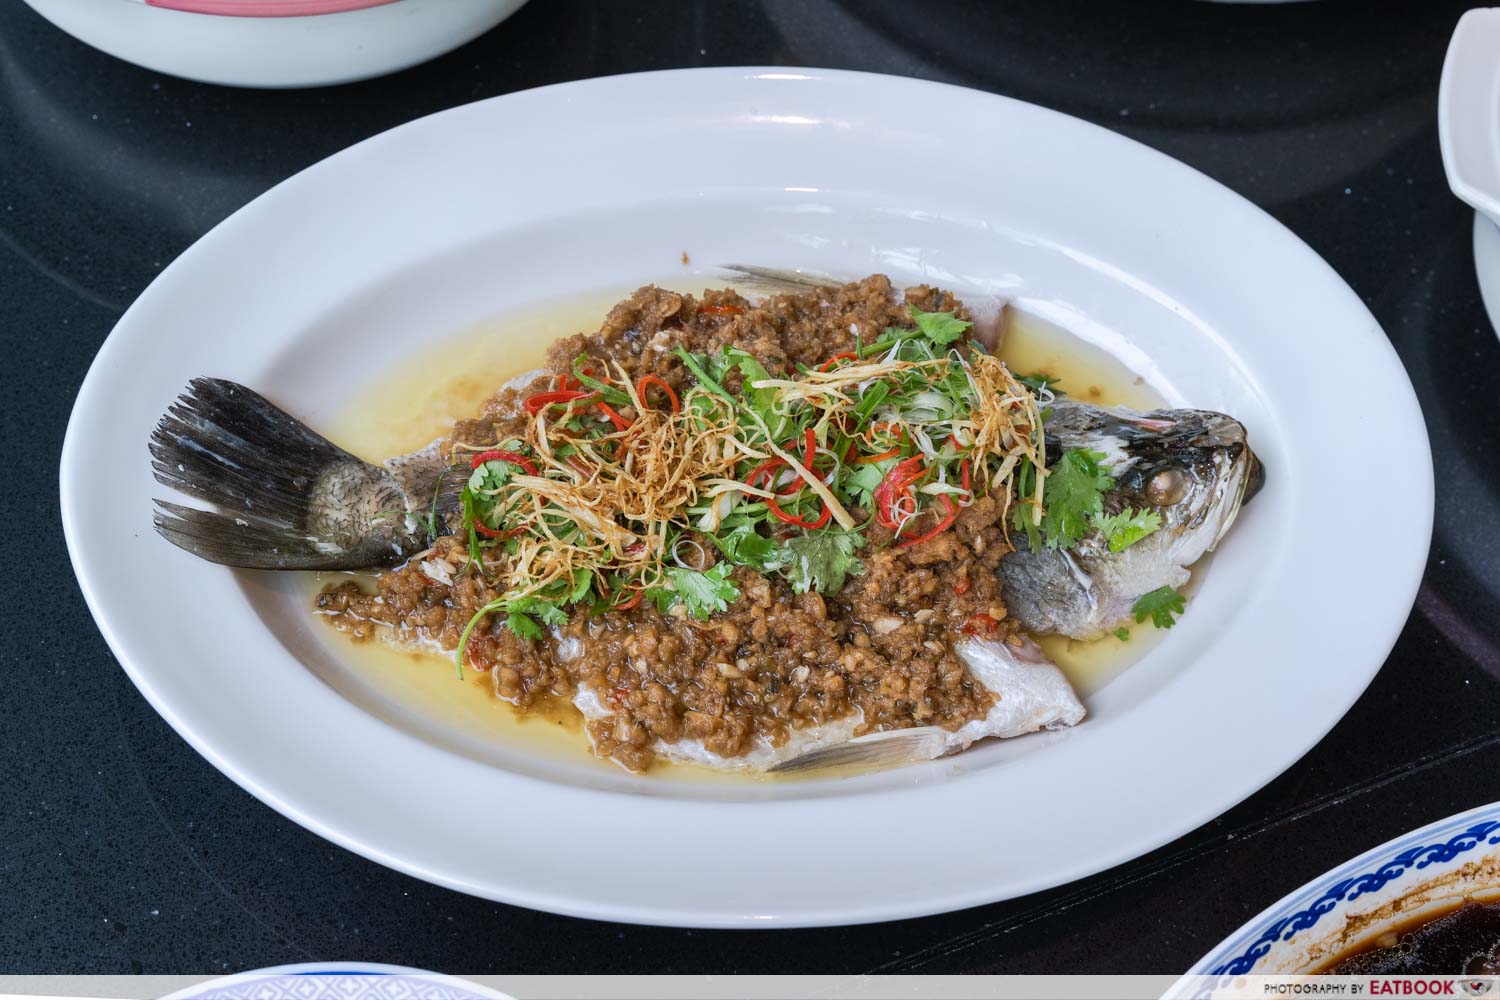 makan at jen parents day - steamed fish